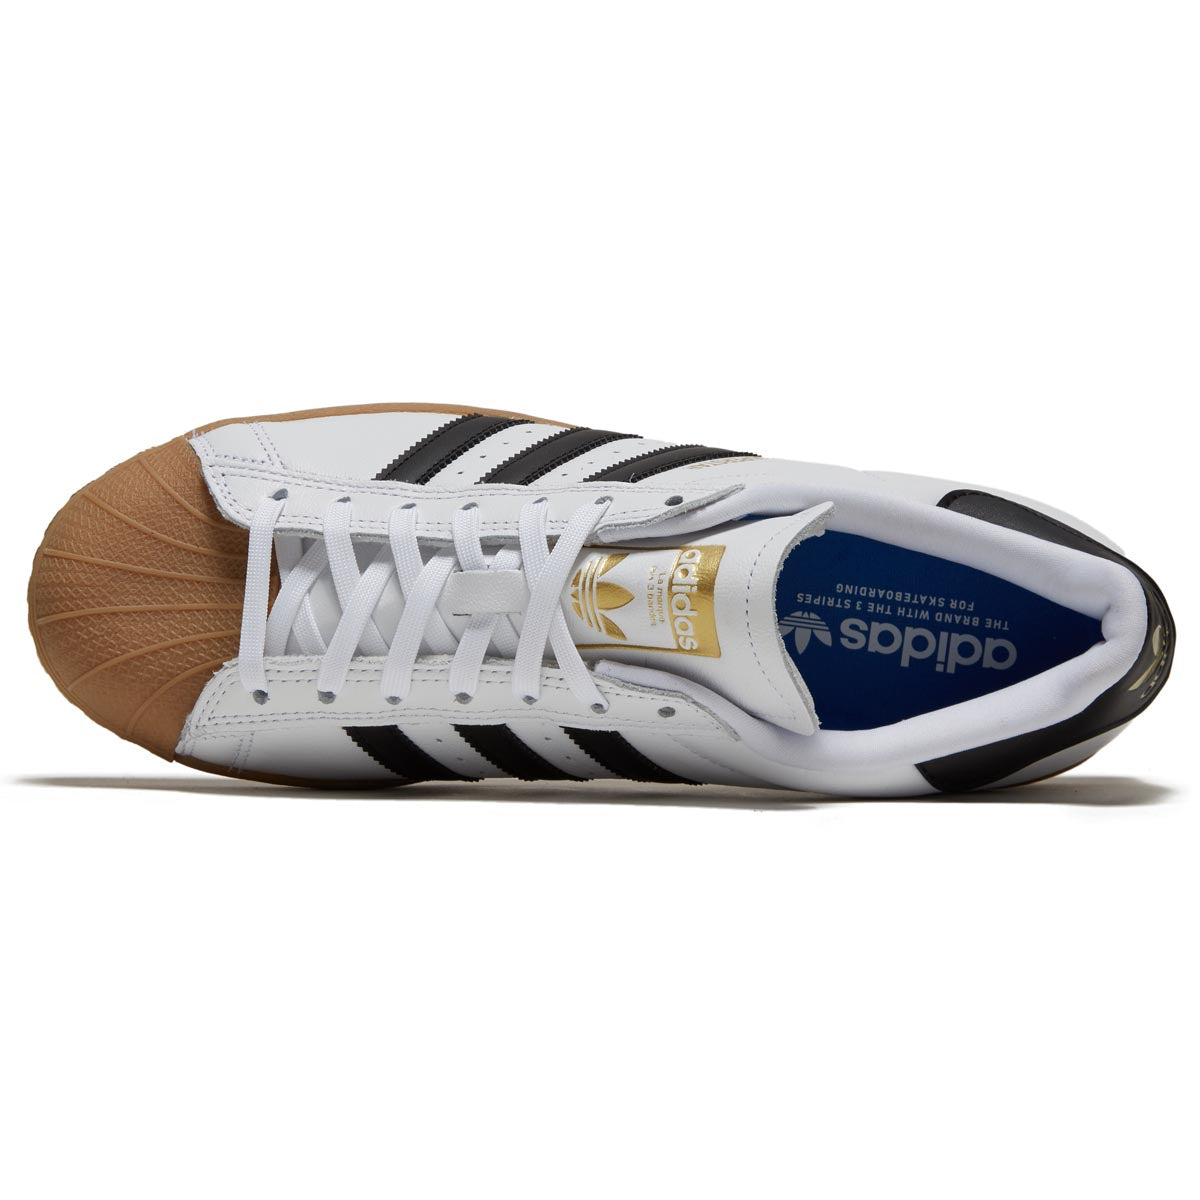 Adidas Superstar ADV Shoes - White/Black/Gum image 3